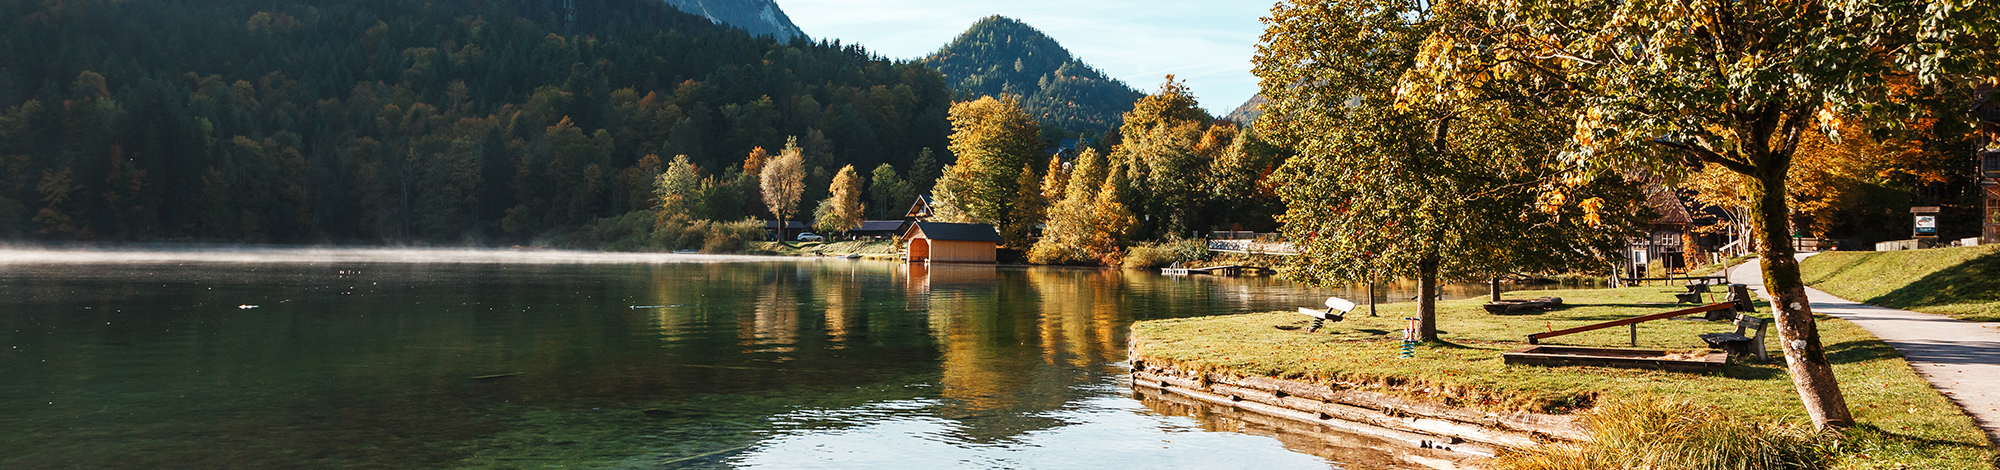 Urlaub am See Steiermark